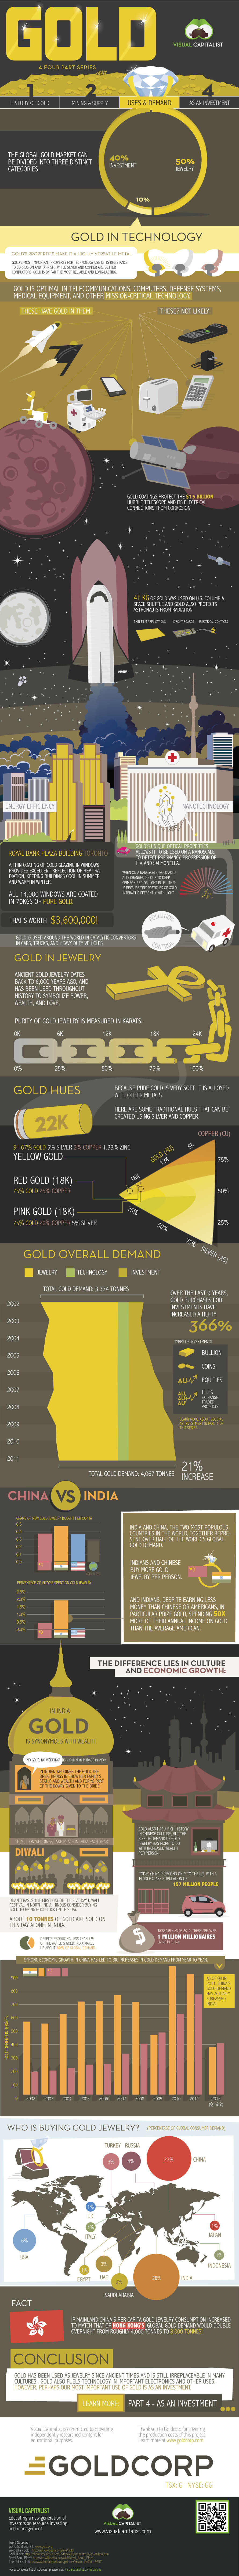 gold-infographic-demand-3